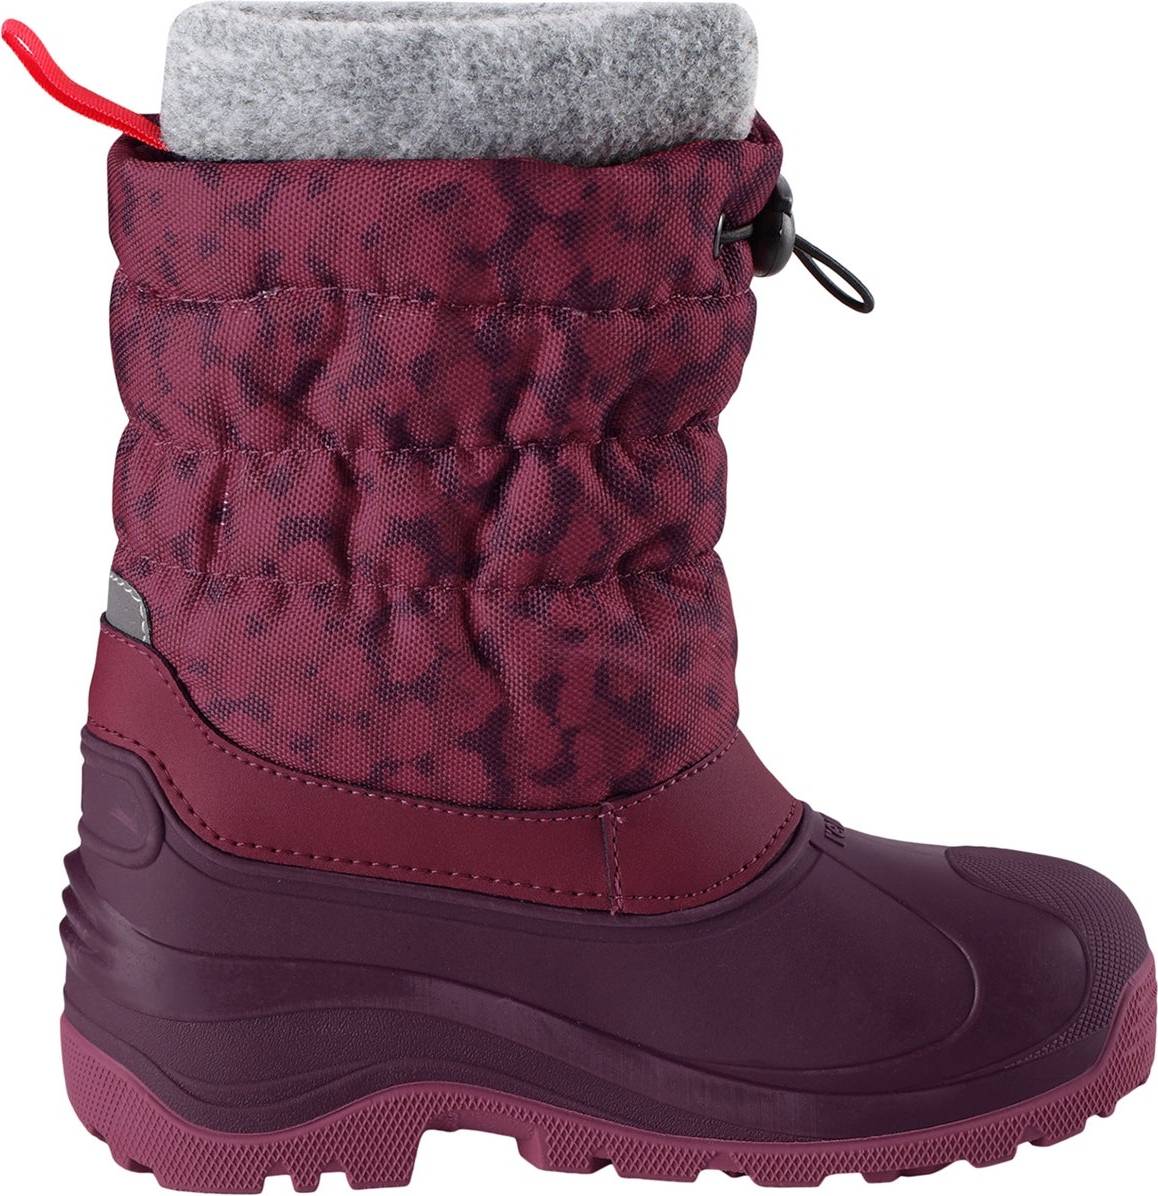  Bild på Reima Ivalo Winter Boots - Dark Berry vinterskor